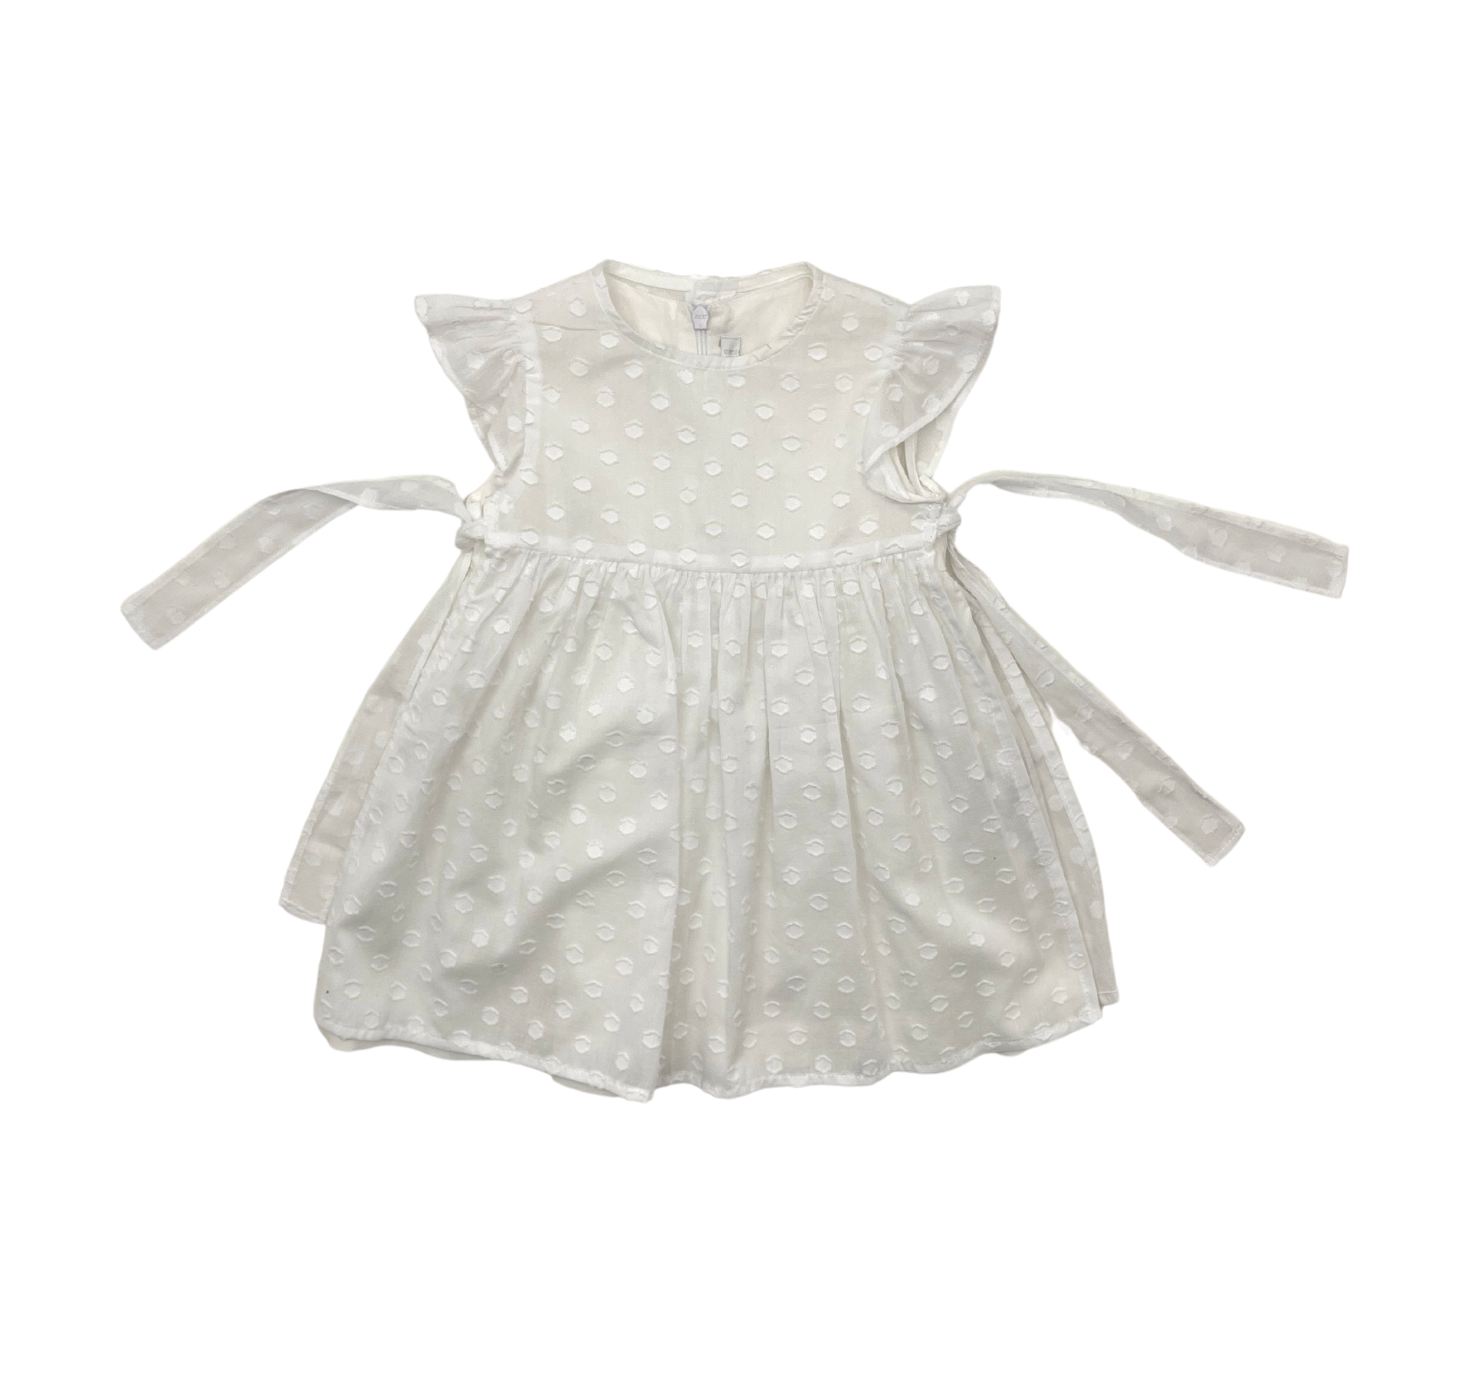 IL GUFO – White polka dot dress - 1 year old